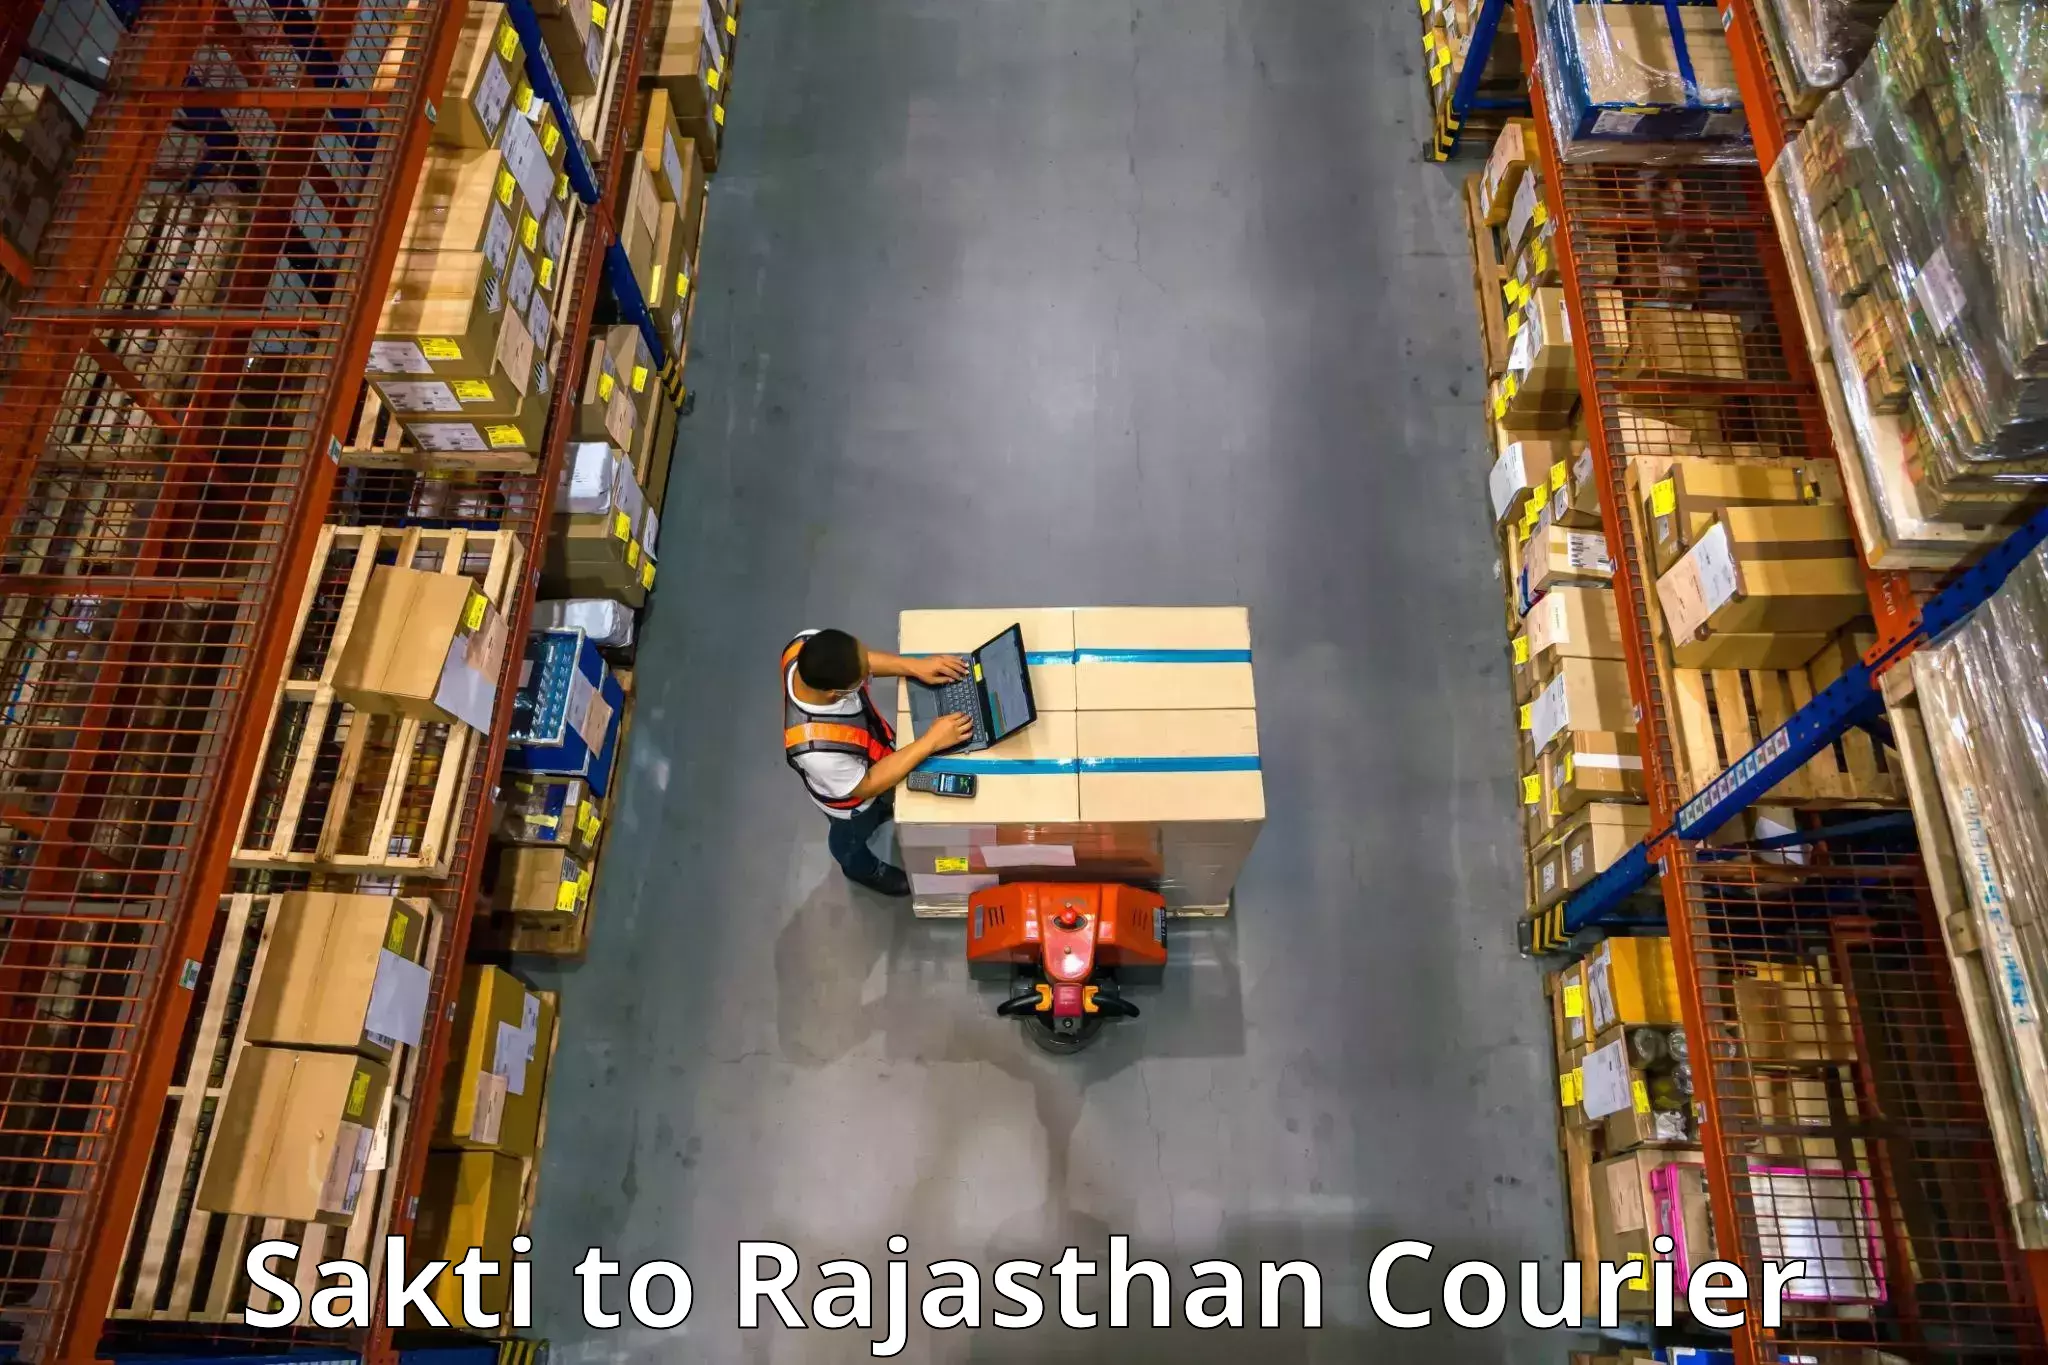 Efficient moving company Sakti to Pokhran